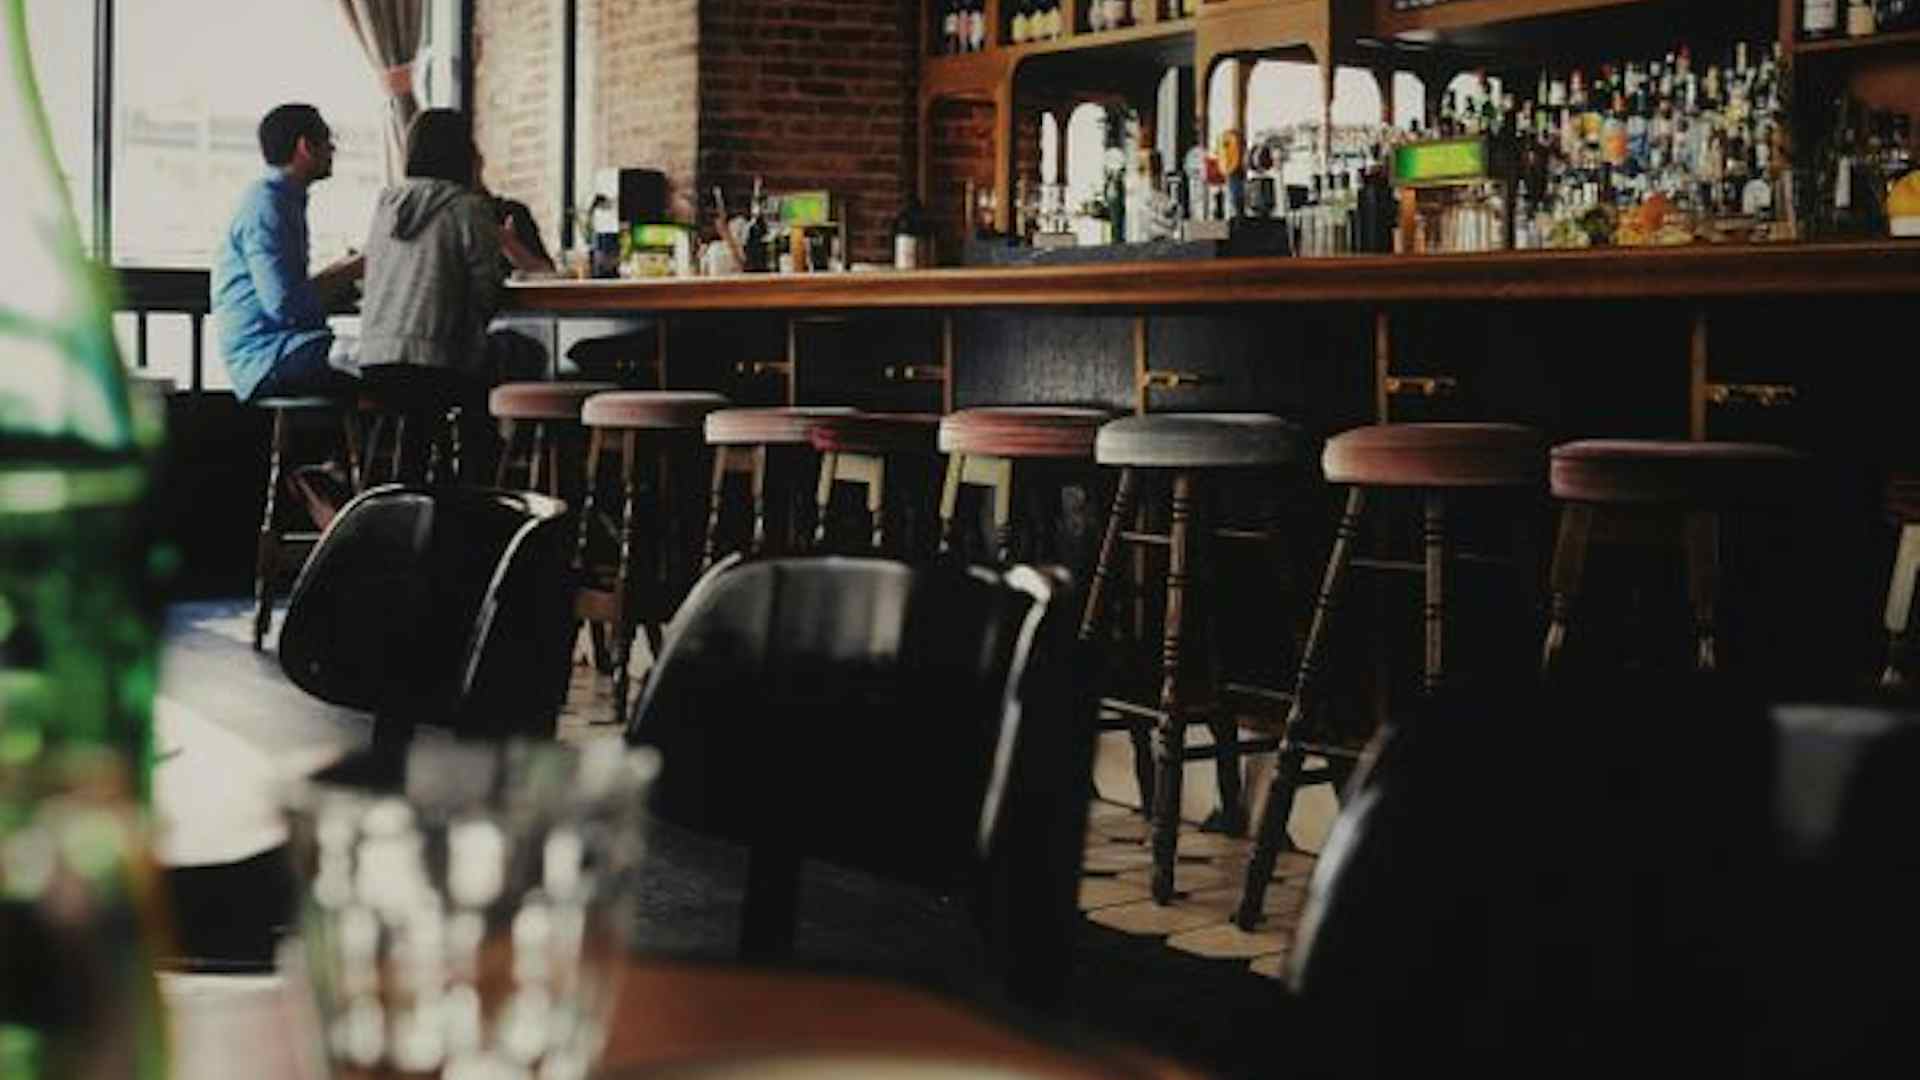 Bars & Restaurants: Government Guidance Explained